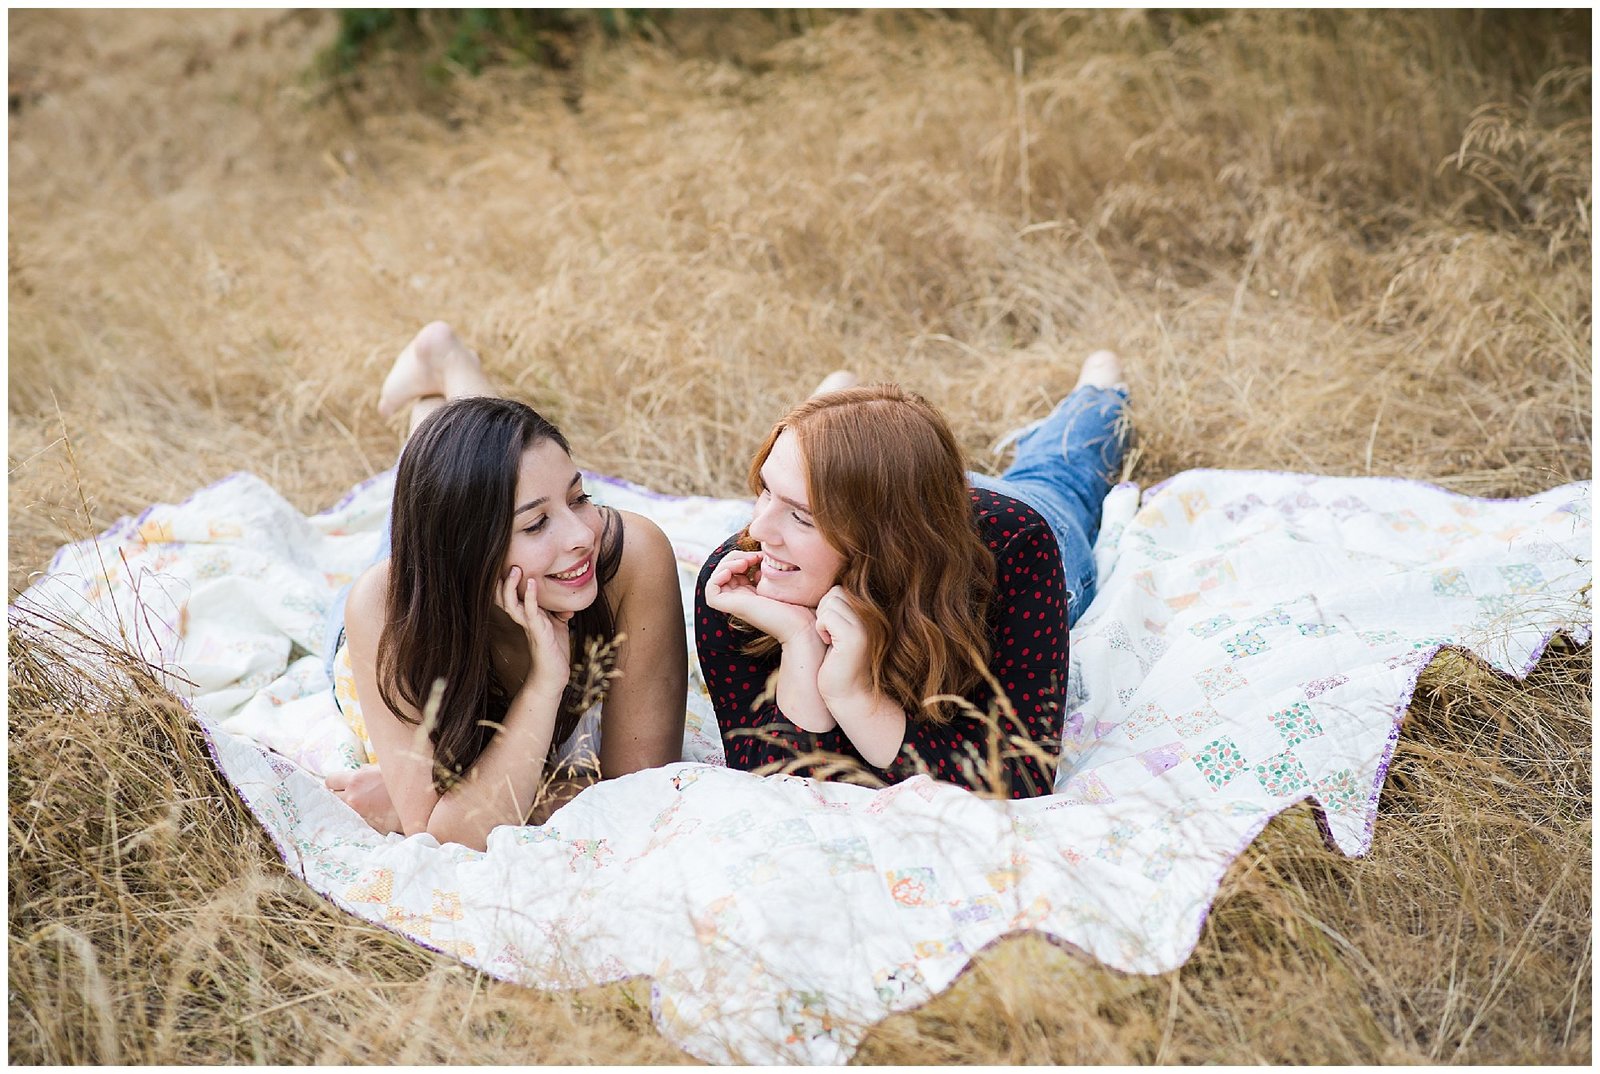 Senior Graduation Girlfriends in Field on Blanket Emily Ann Photography Seattle Photographer